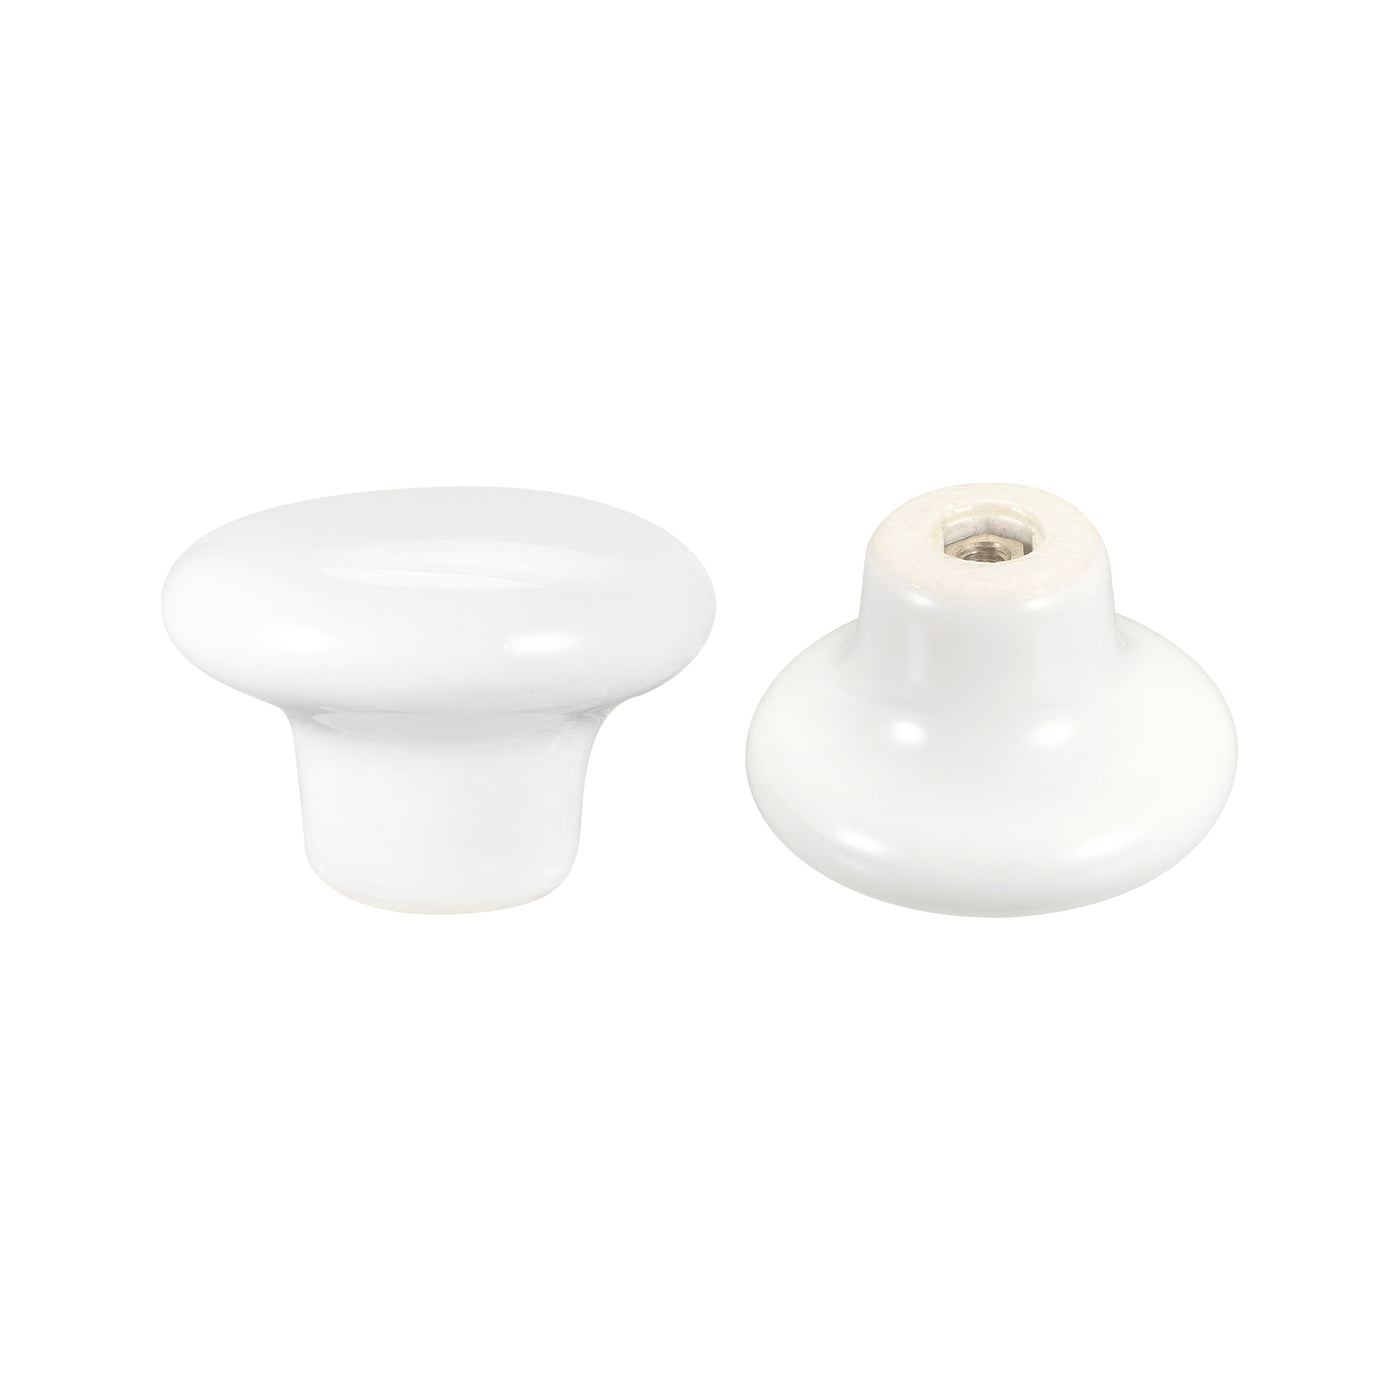 uxcell Uxcell Ceramic Drawer Knobs 6pcs Mushroom Shape Pulls 1.1"x1.5" for Dresser(White)